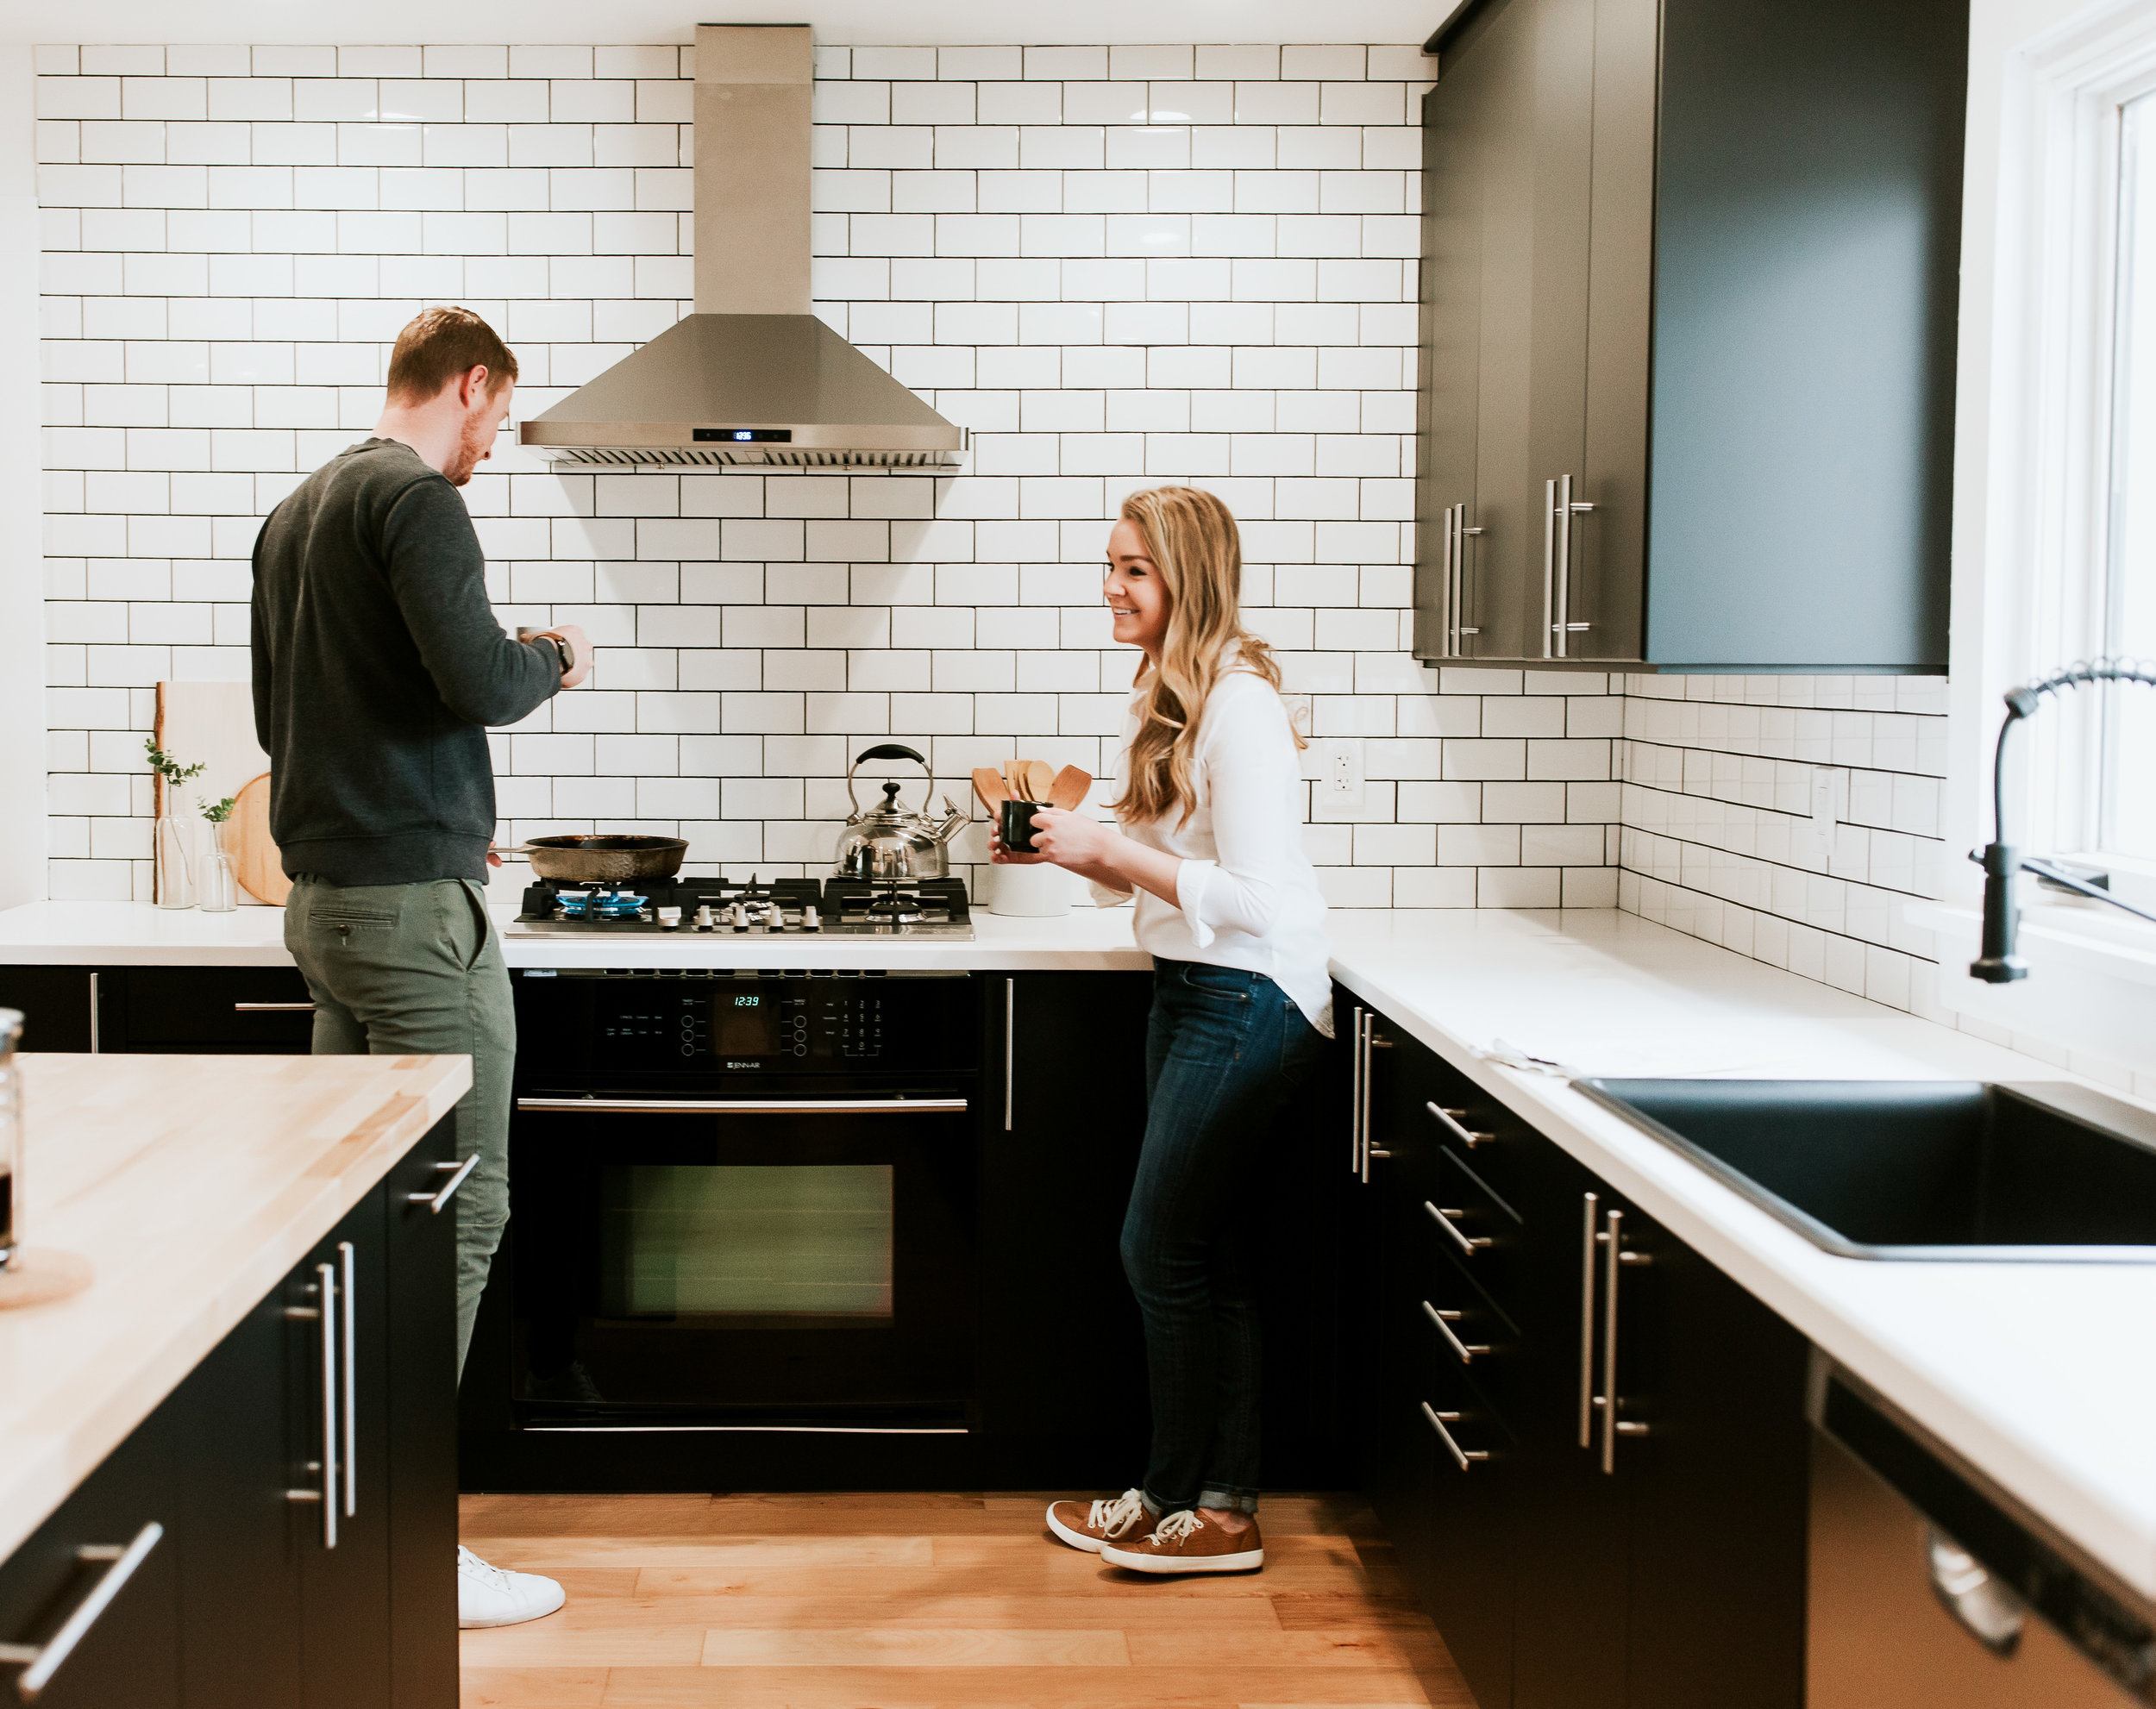 Full modern kitchen tour - Ikea Kungsbacka cabinets, subway tile, light wood floors, range hood